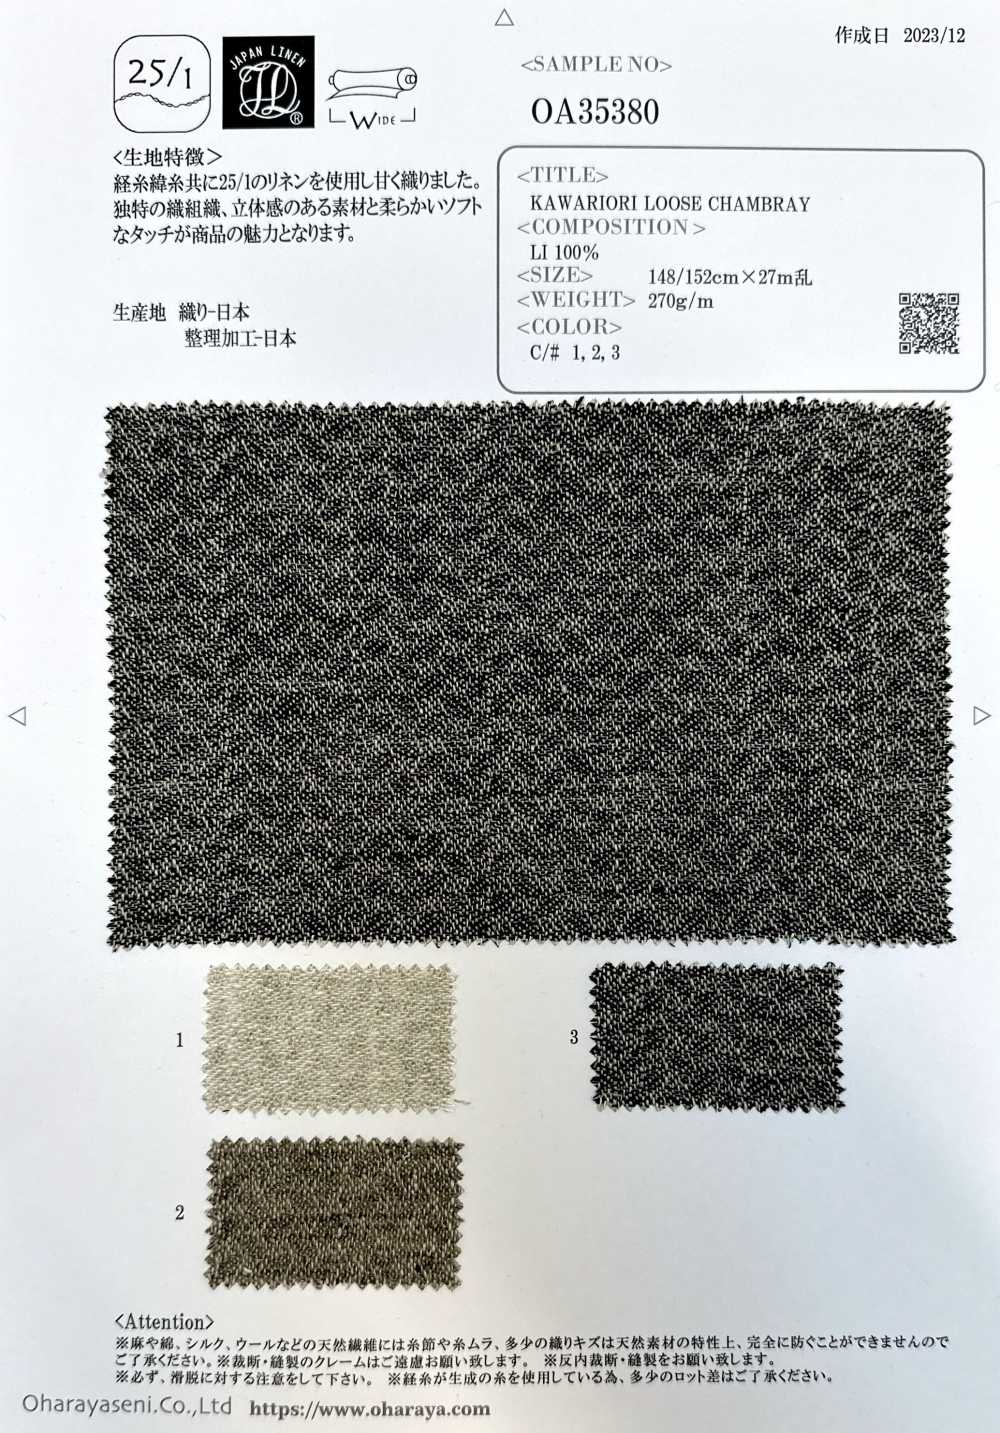 OA35380 KAWARIORI LOOSE CHAMBRAY[Textile / Fabric] Oharayaseni